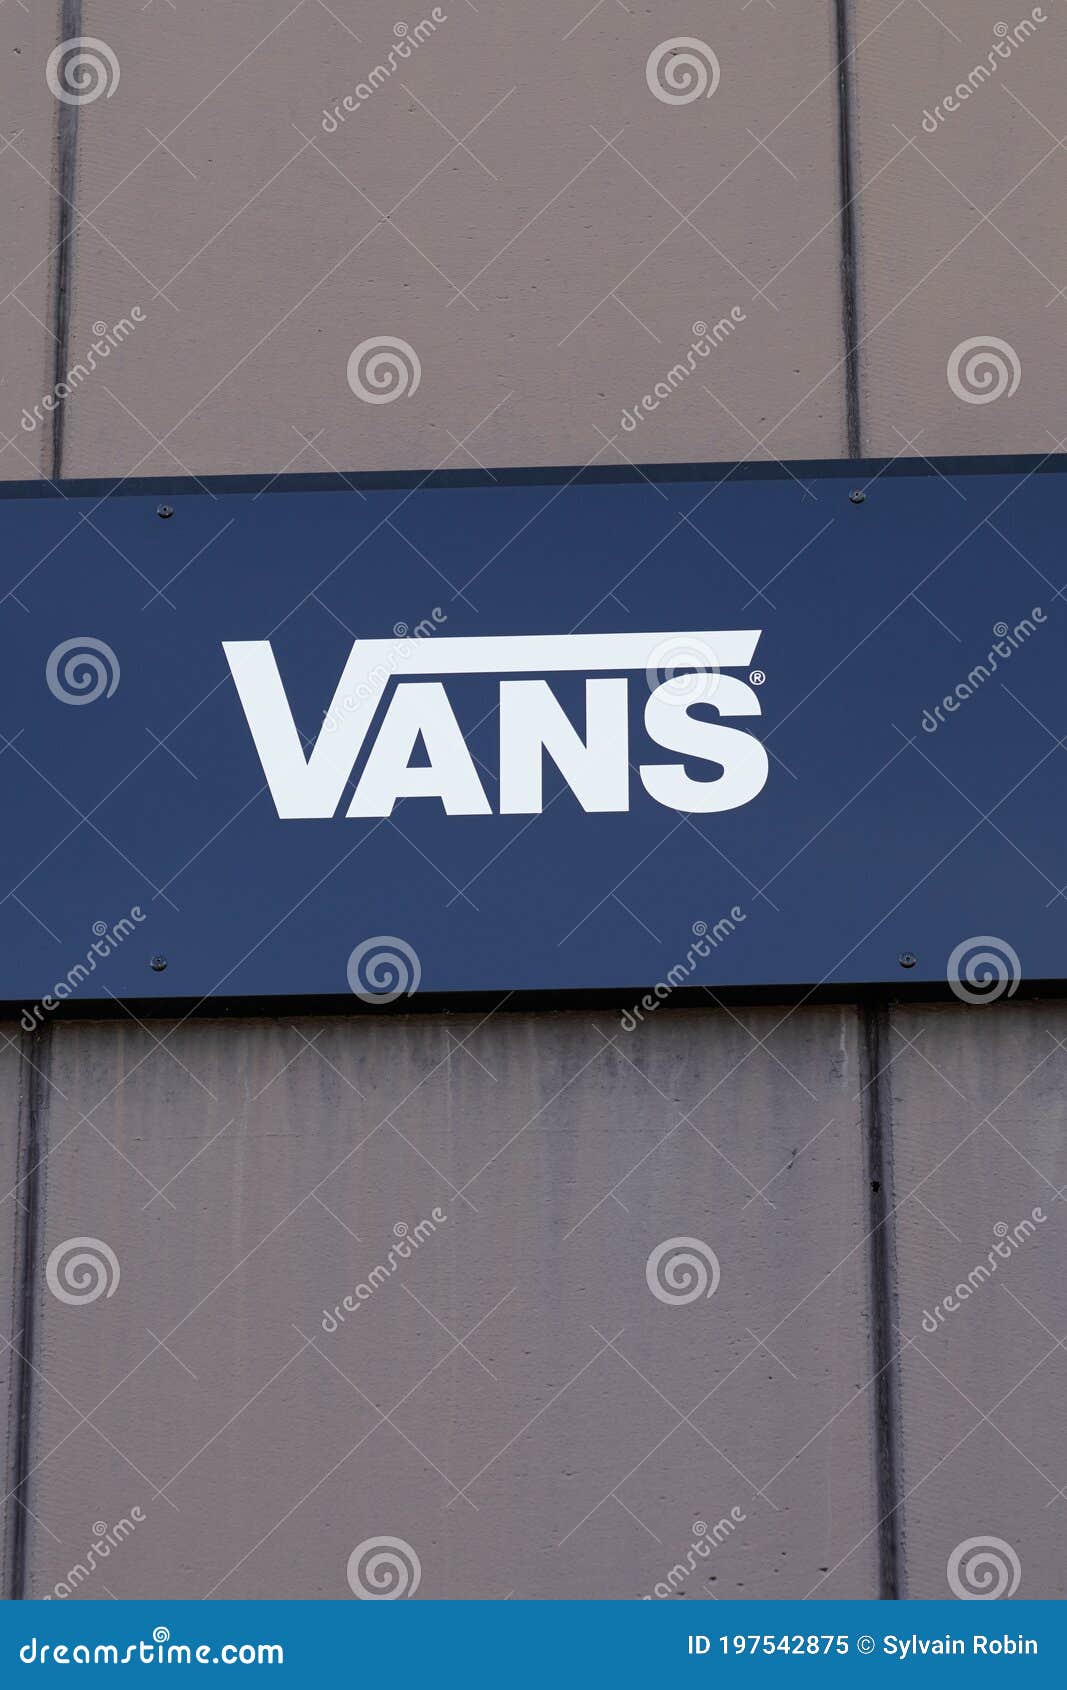 vans company id